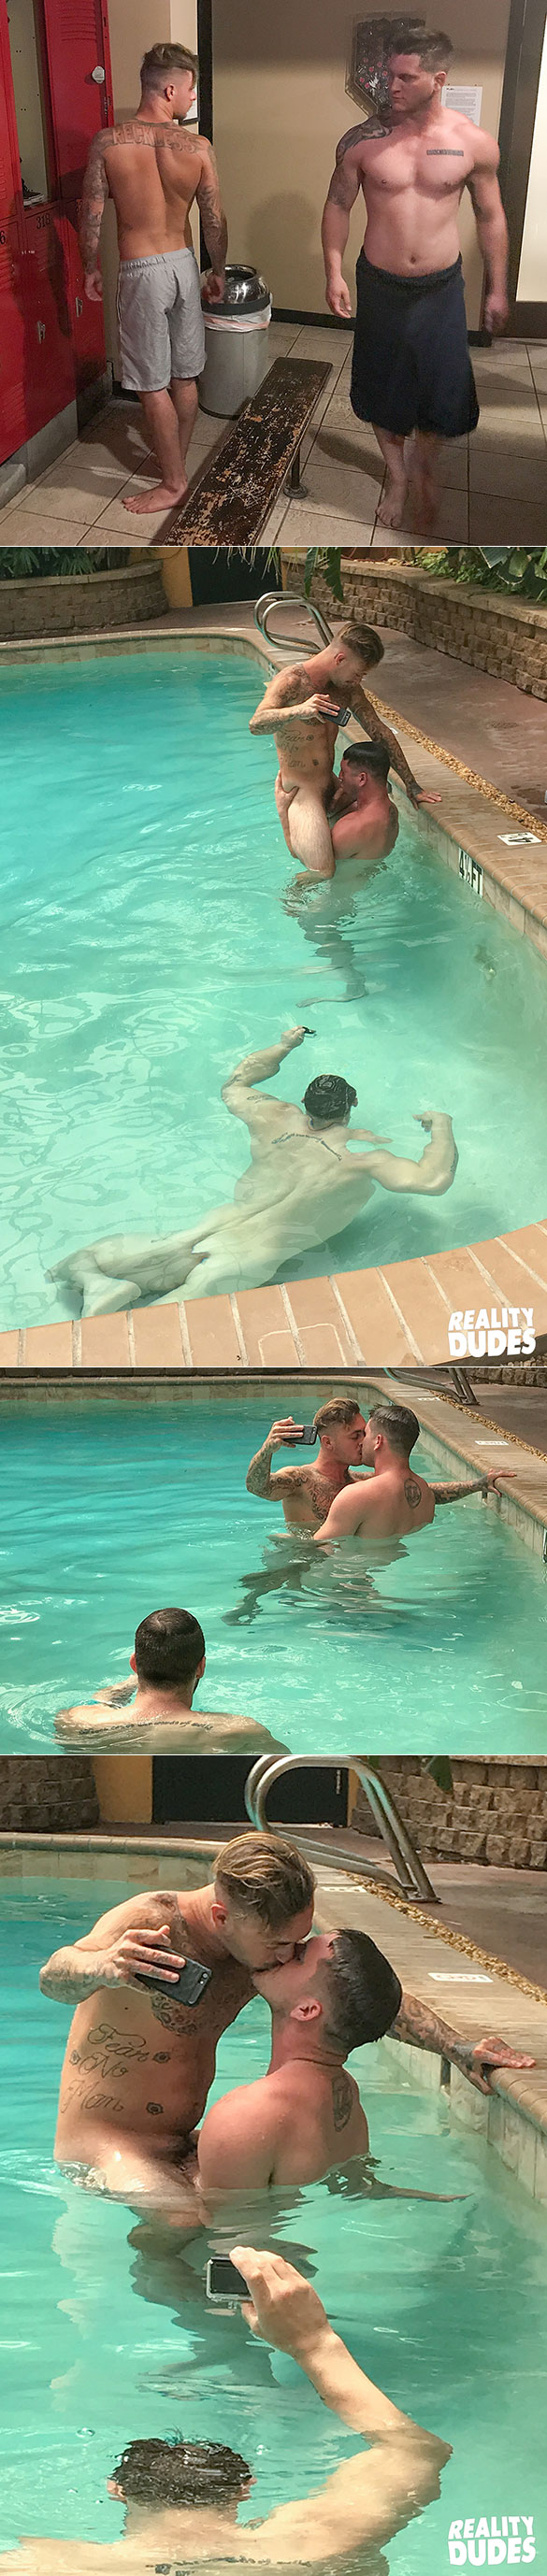 Reality Dudes: Brian Michaels fucks Allen Lucas in "Dudes In Public 23 - Wet and Wild"